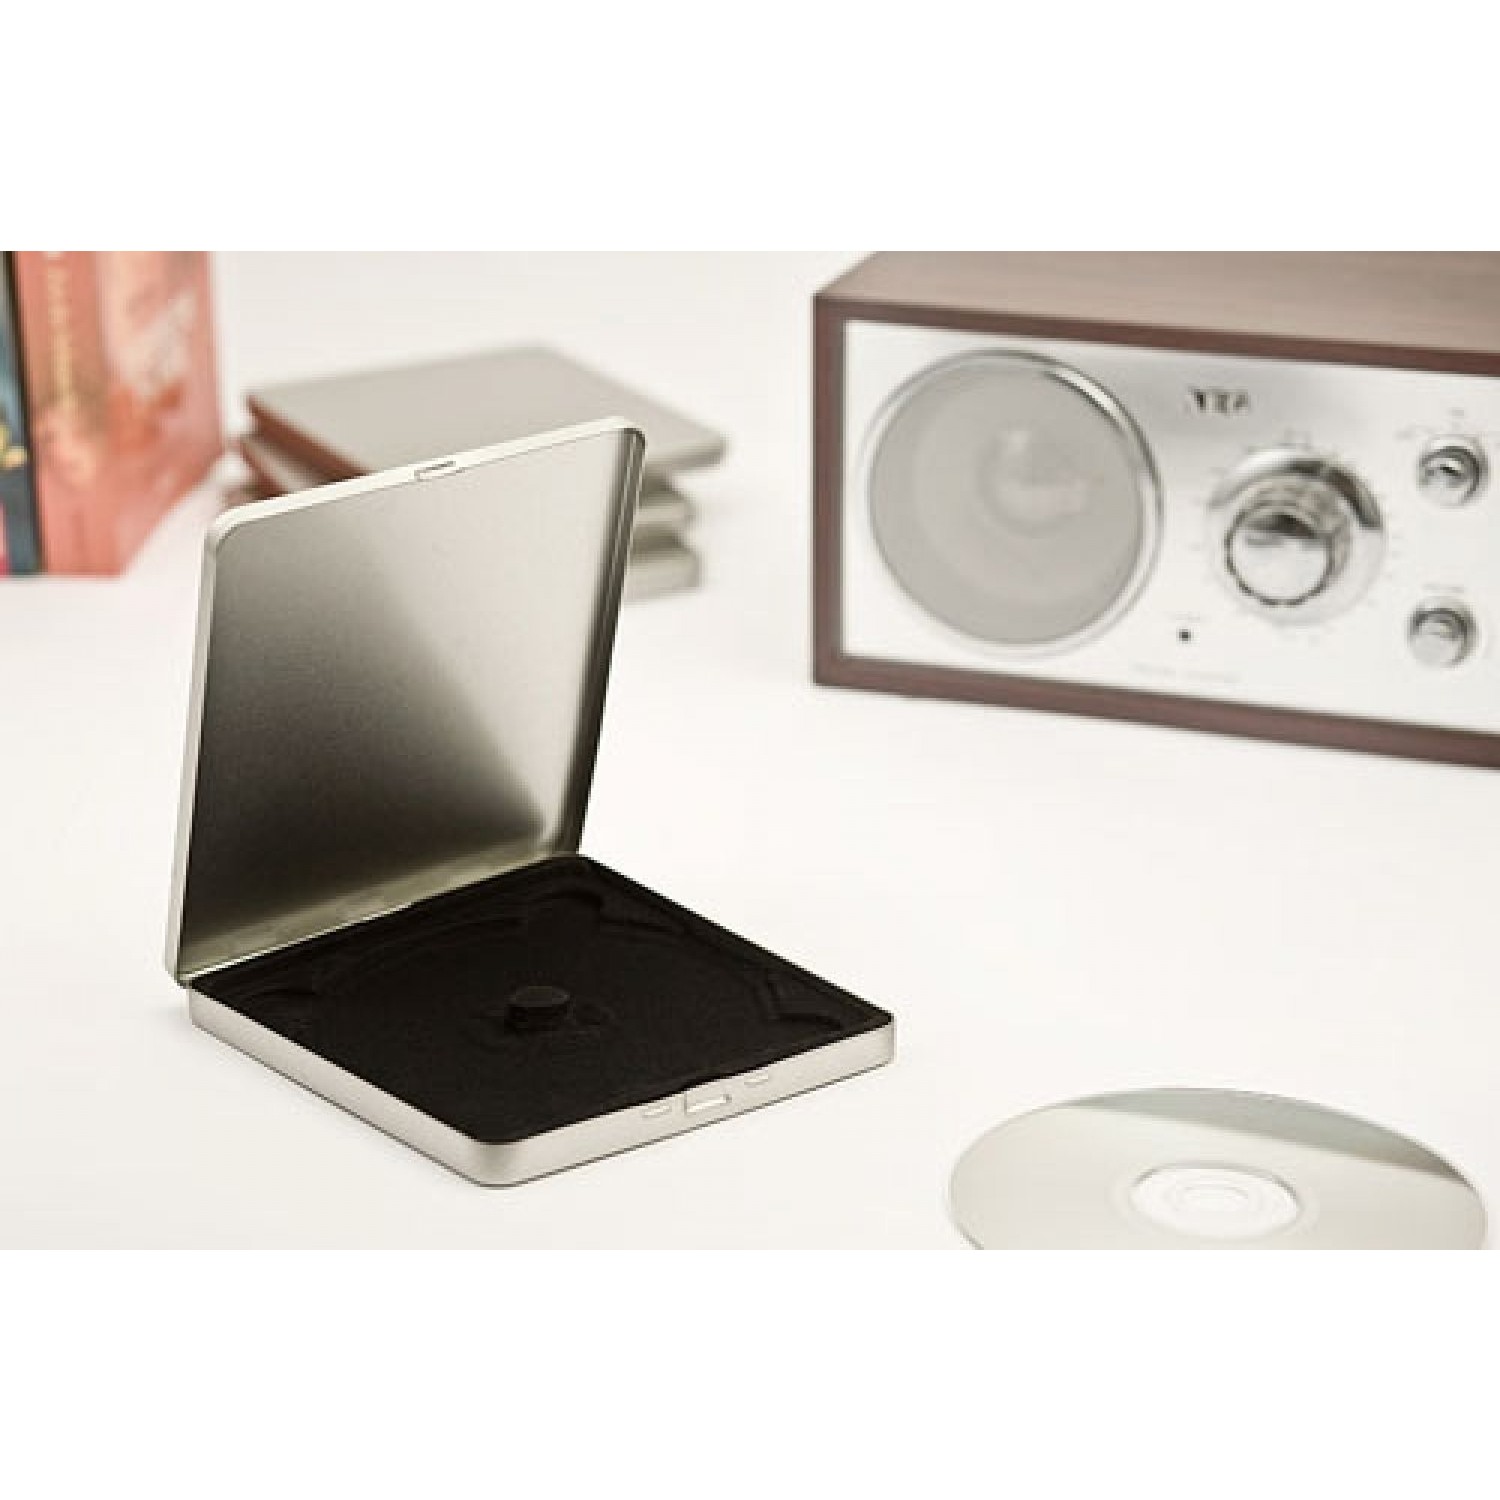 Nachhaltige CD/DVD/Blu ray Box aus Weißblech » Tindobo